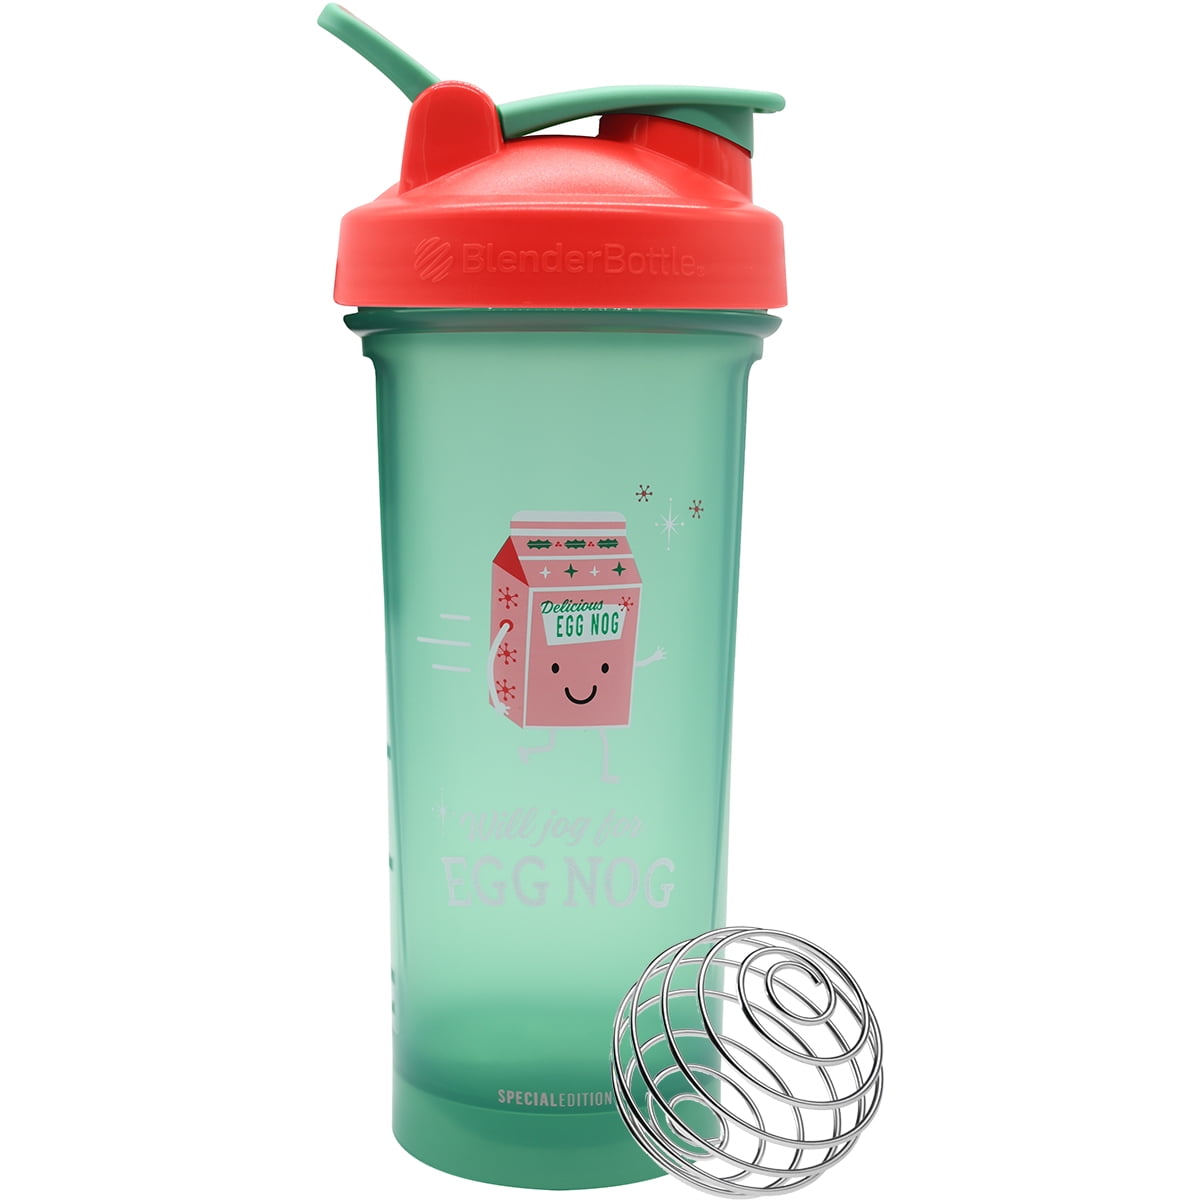 GET NAKED Naked Nutrition Shaker Bottle with Blender Ball - 28oz - Cle